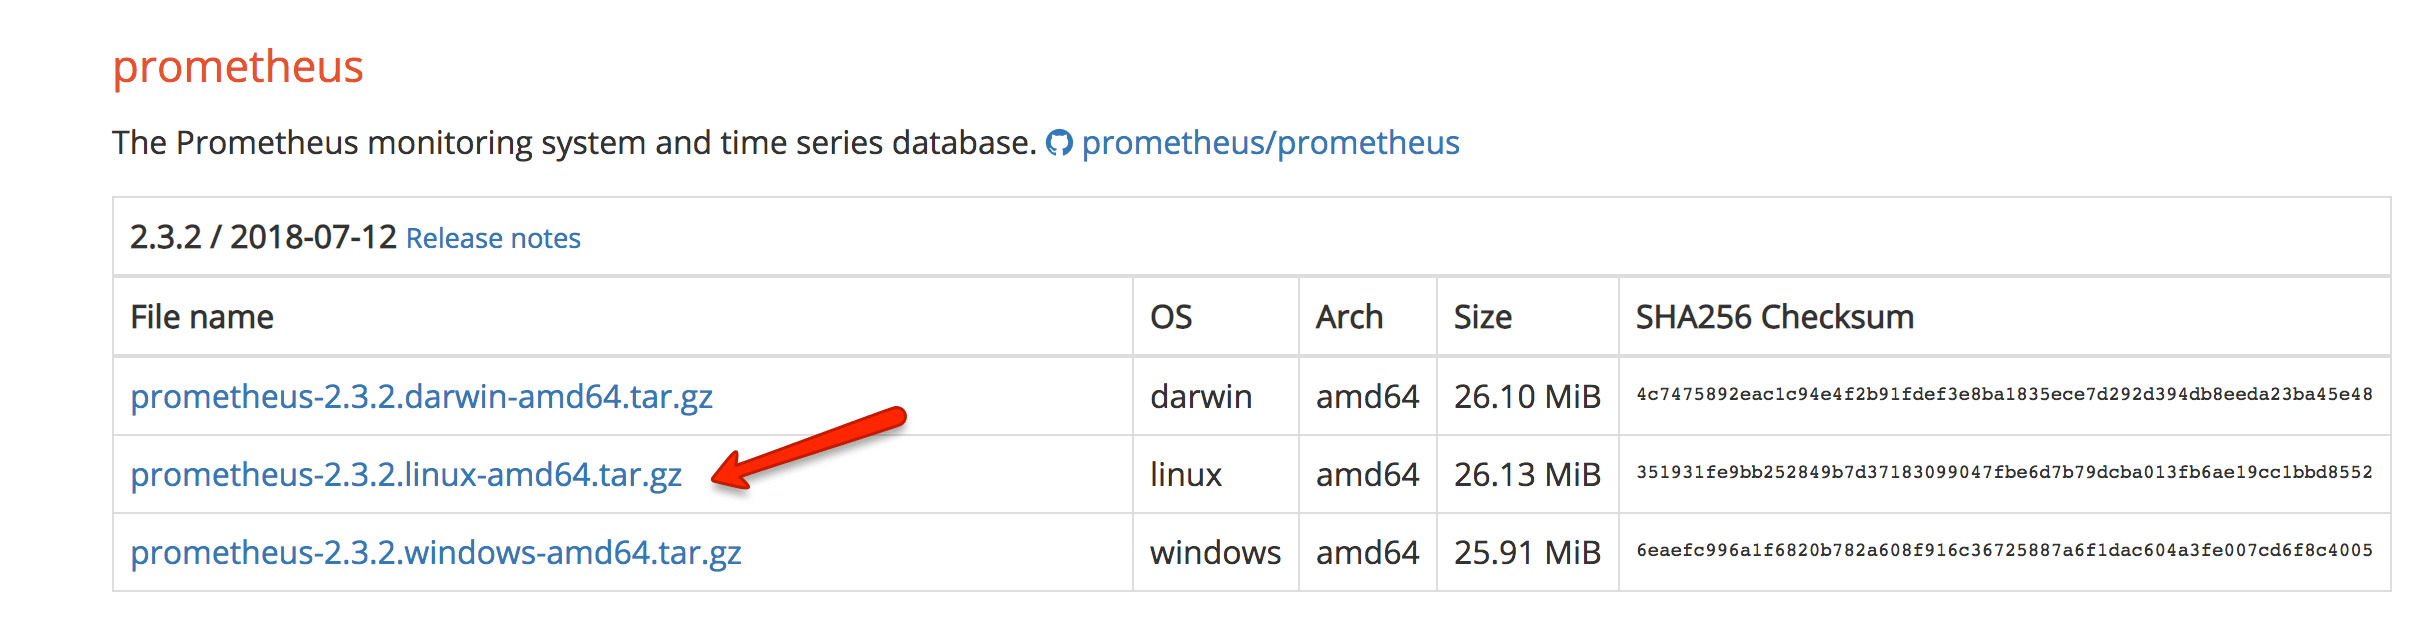 prometheus linux download link